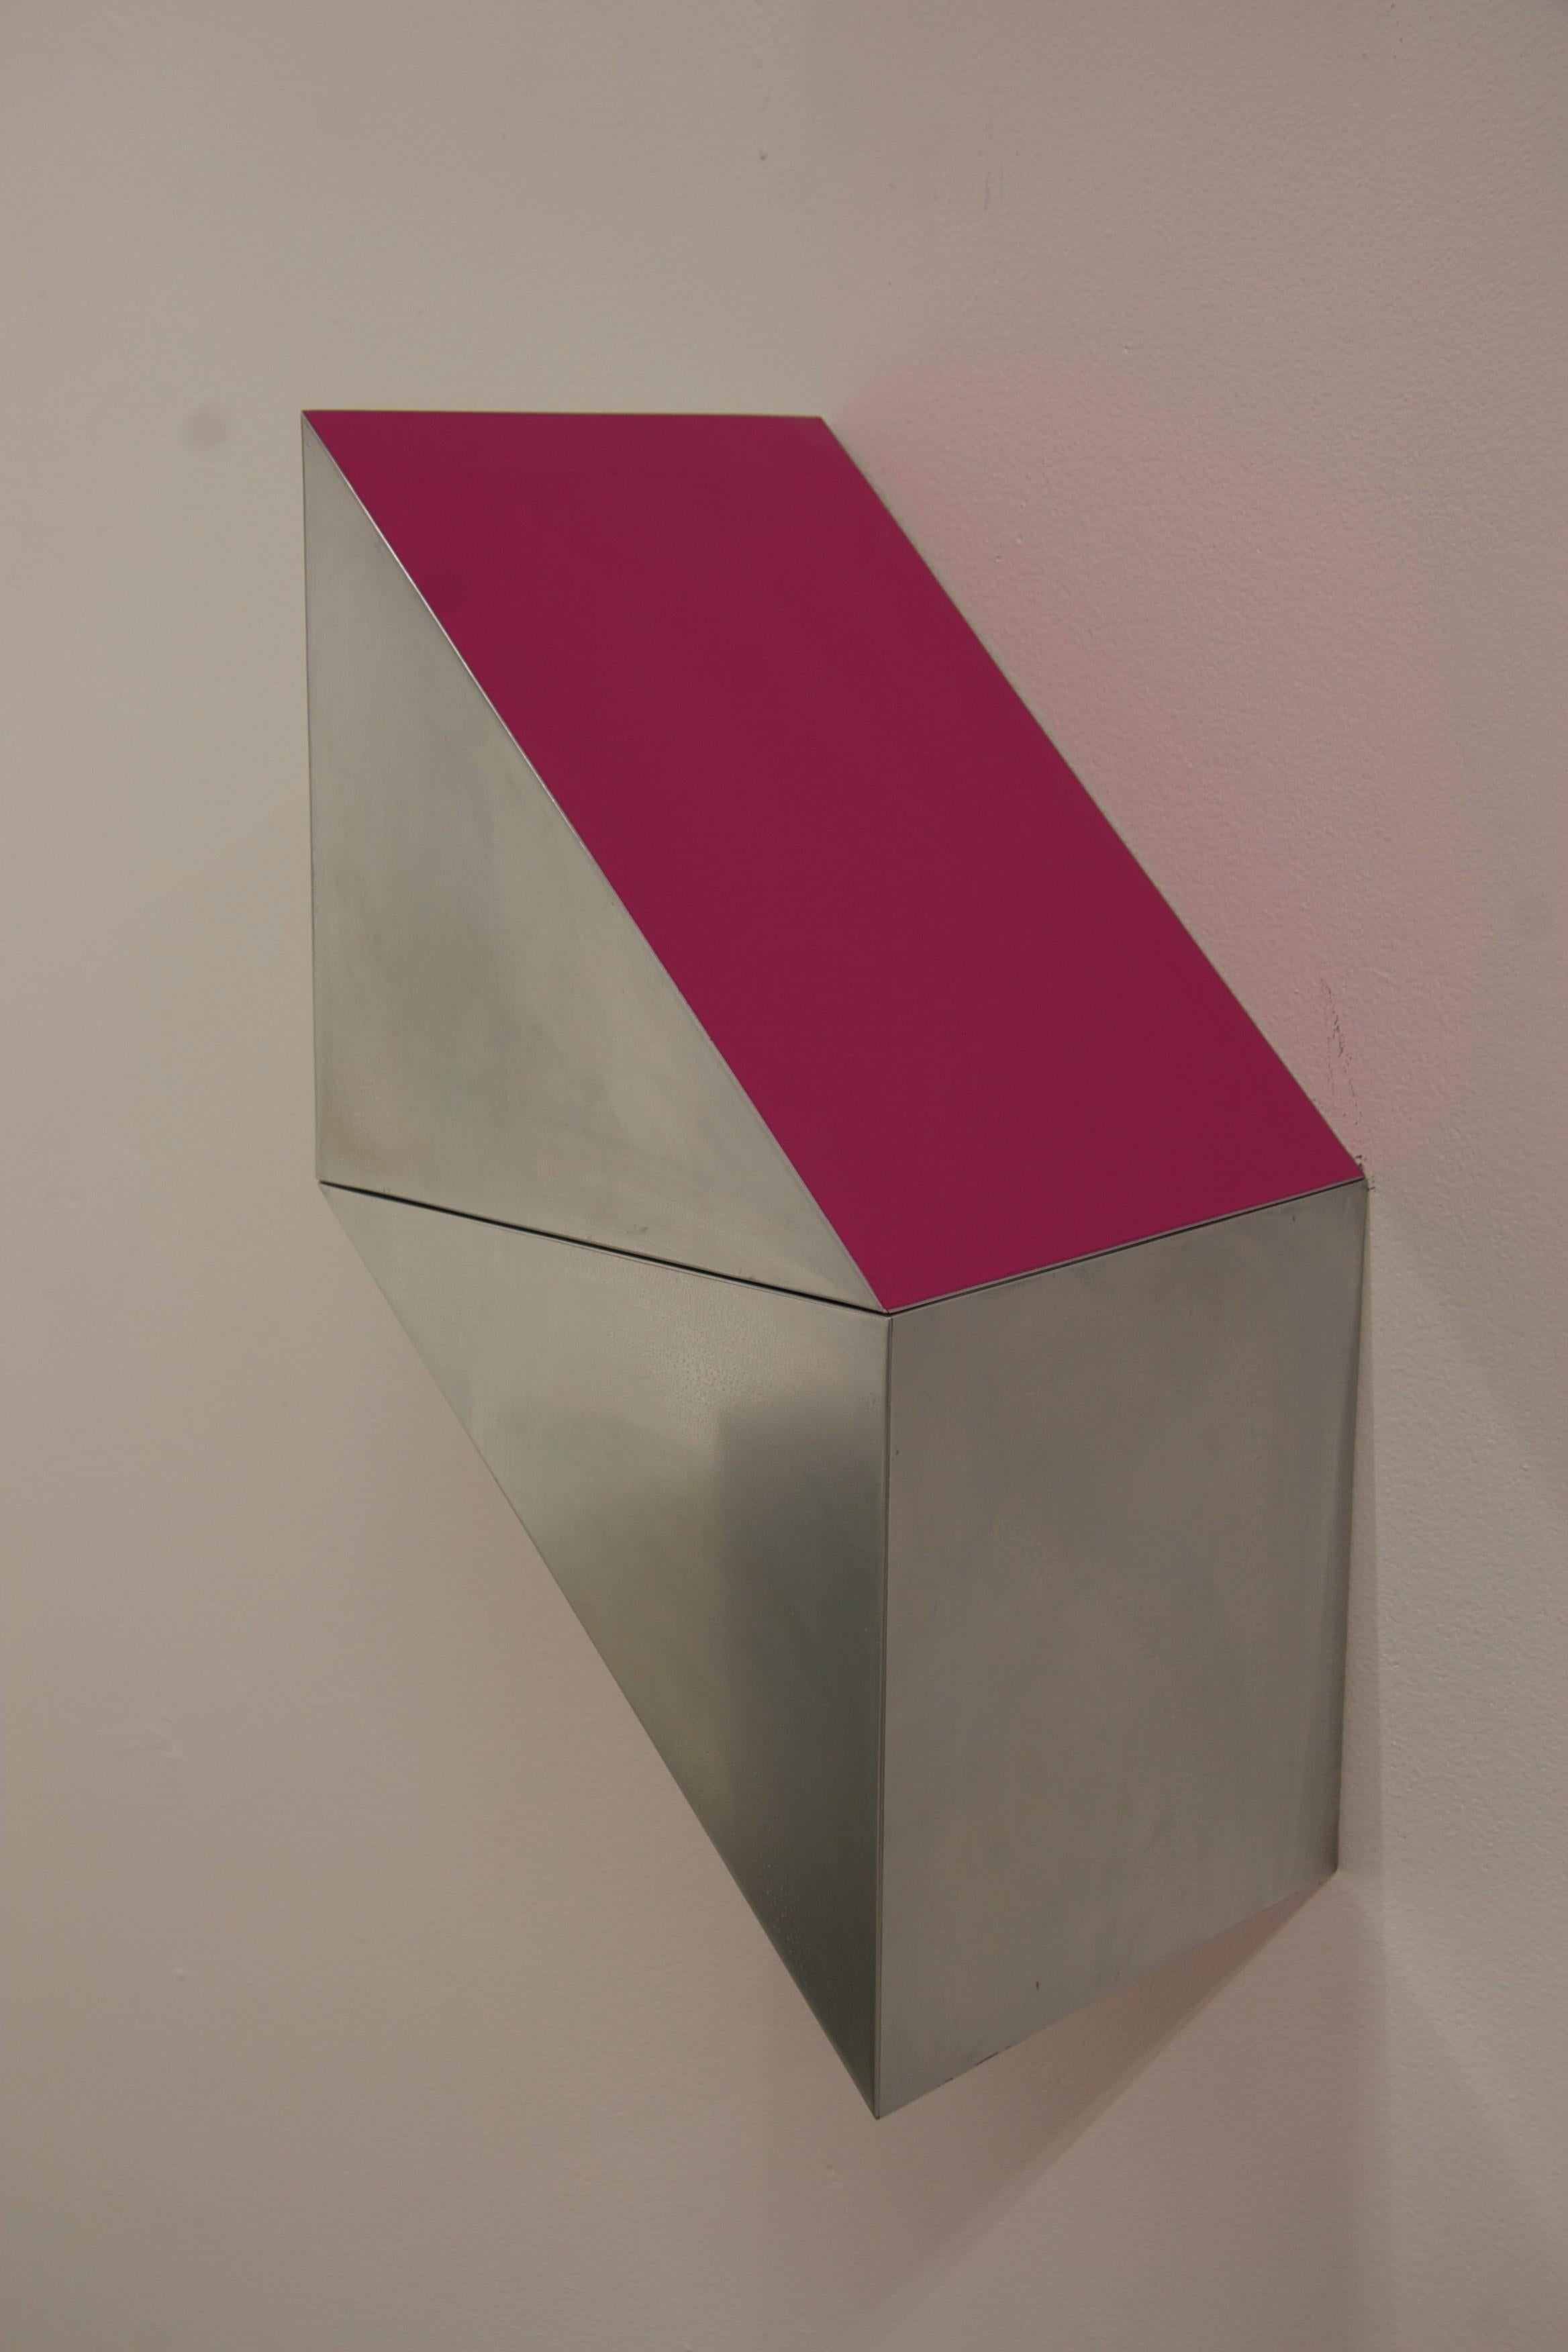 Arno Kortschot Abstract Sculpture - Magenta Wedge